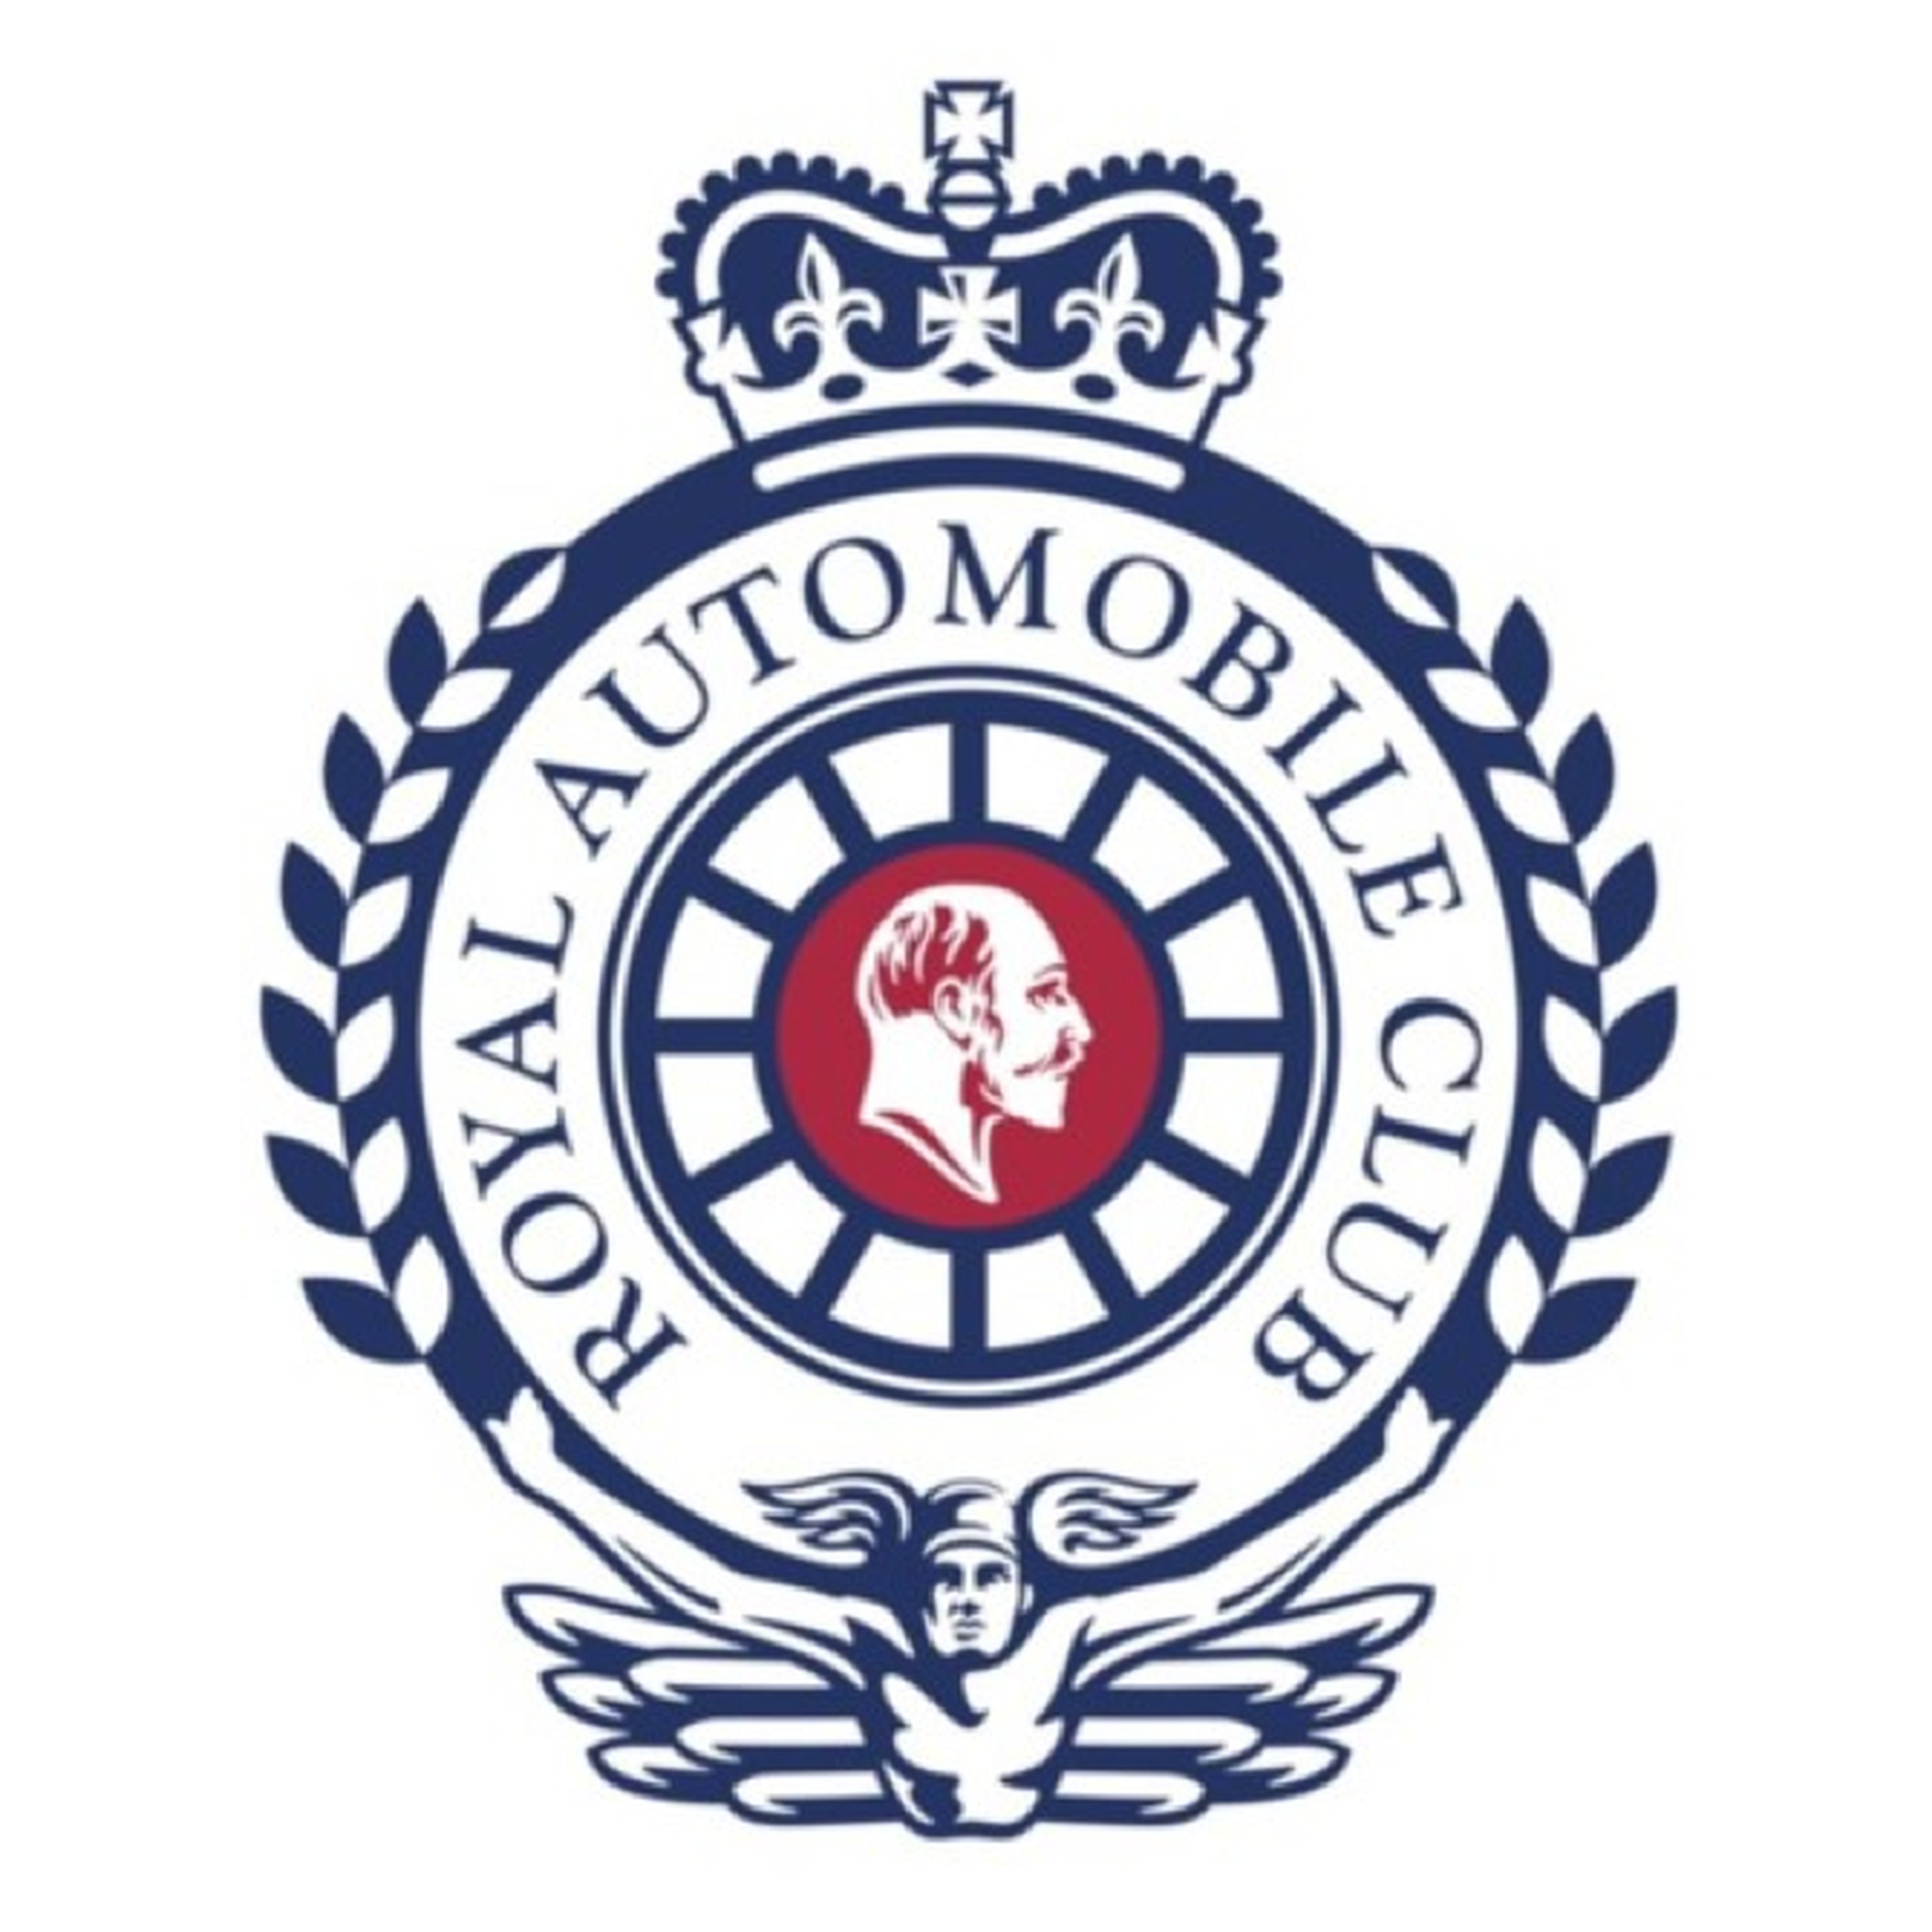 Tiff Needell: Royal Automobile Club Talk Show